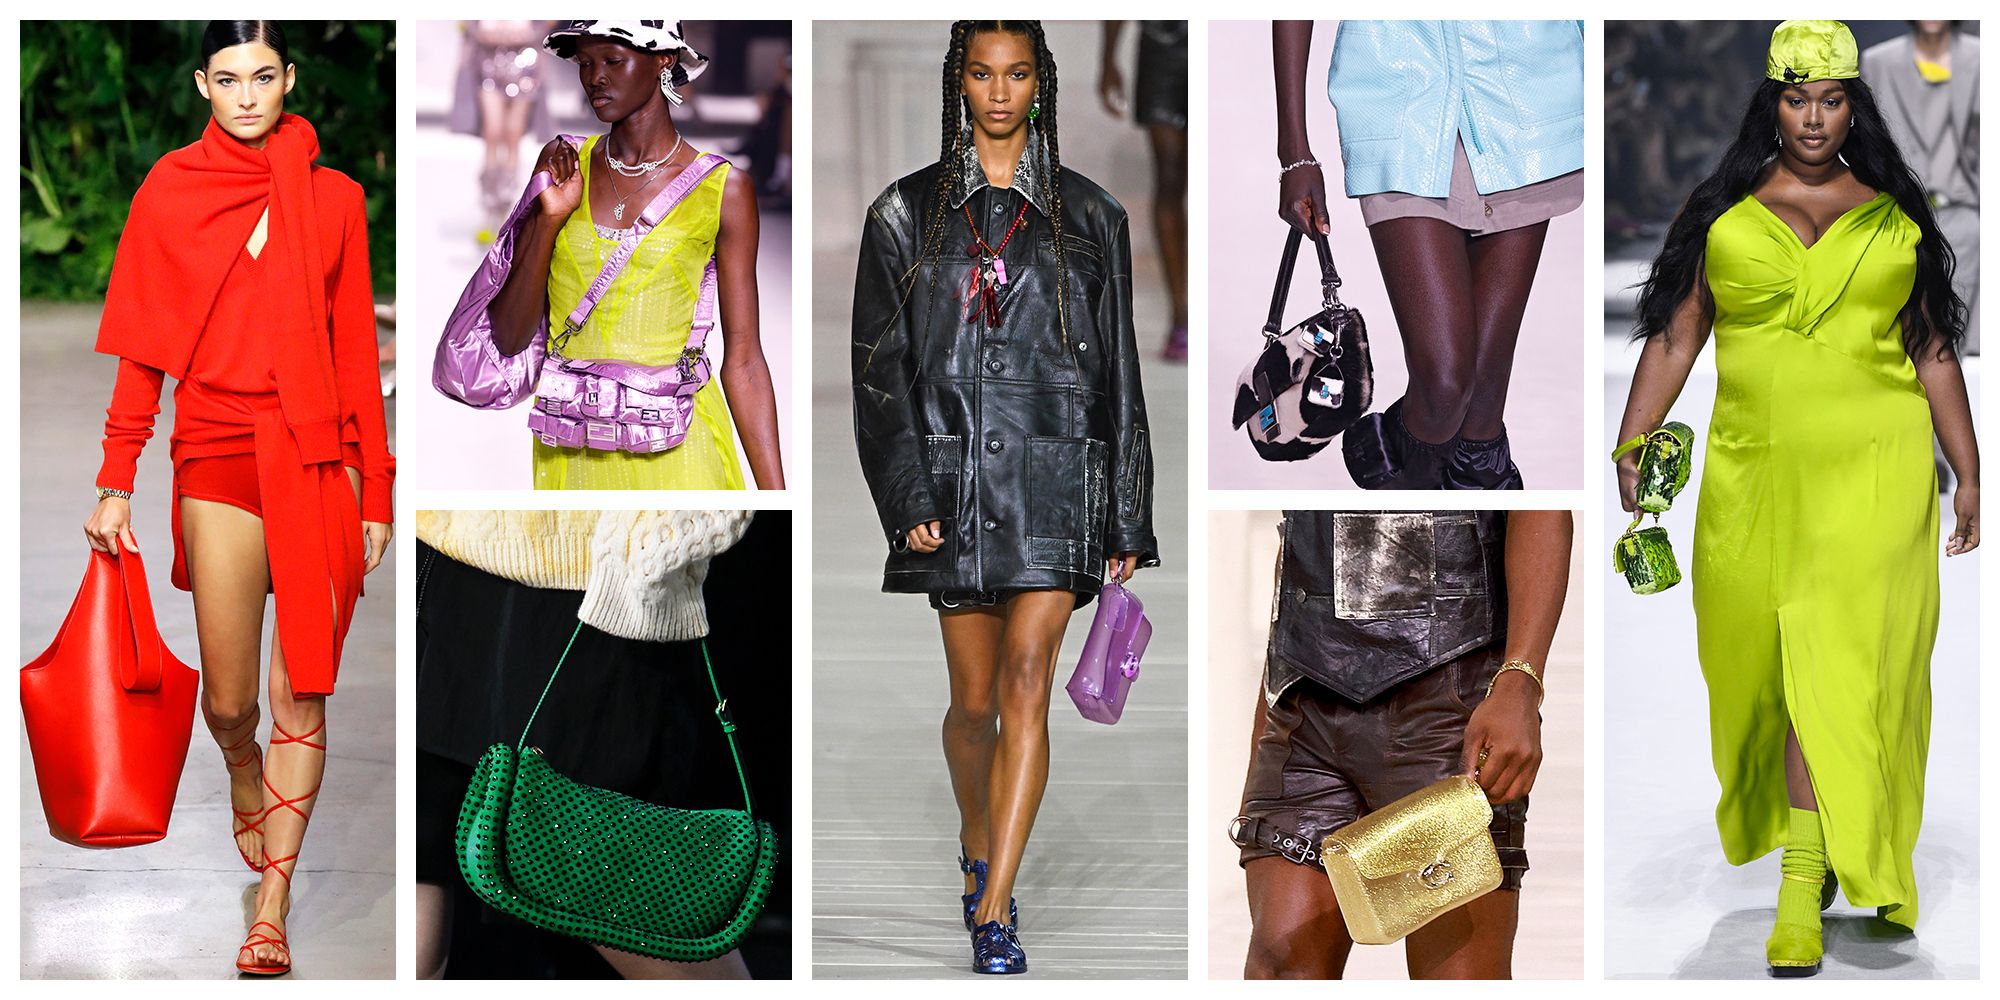 10 Most Popular Kate Spade Bags | Viora London